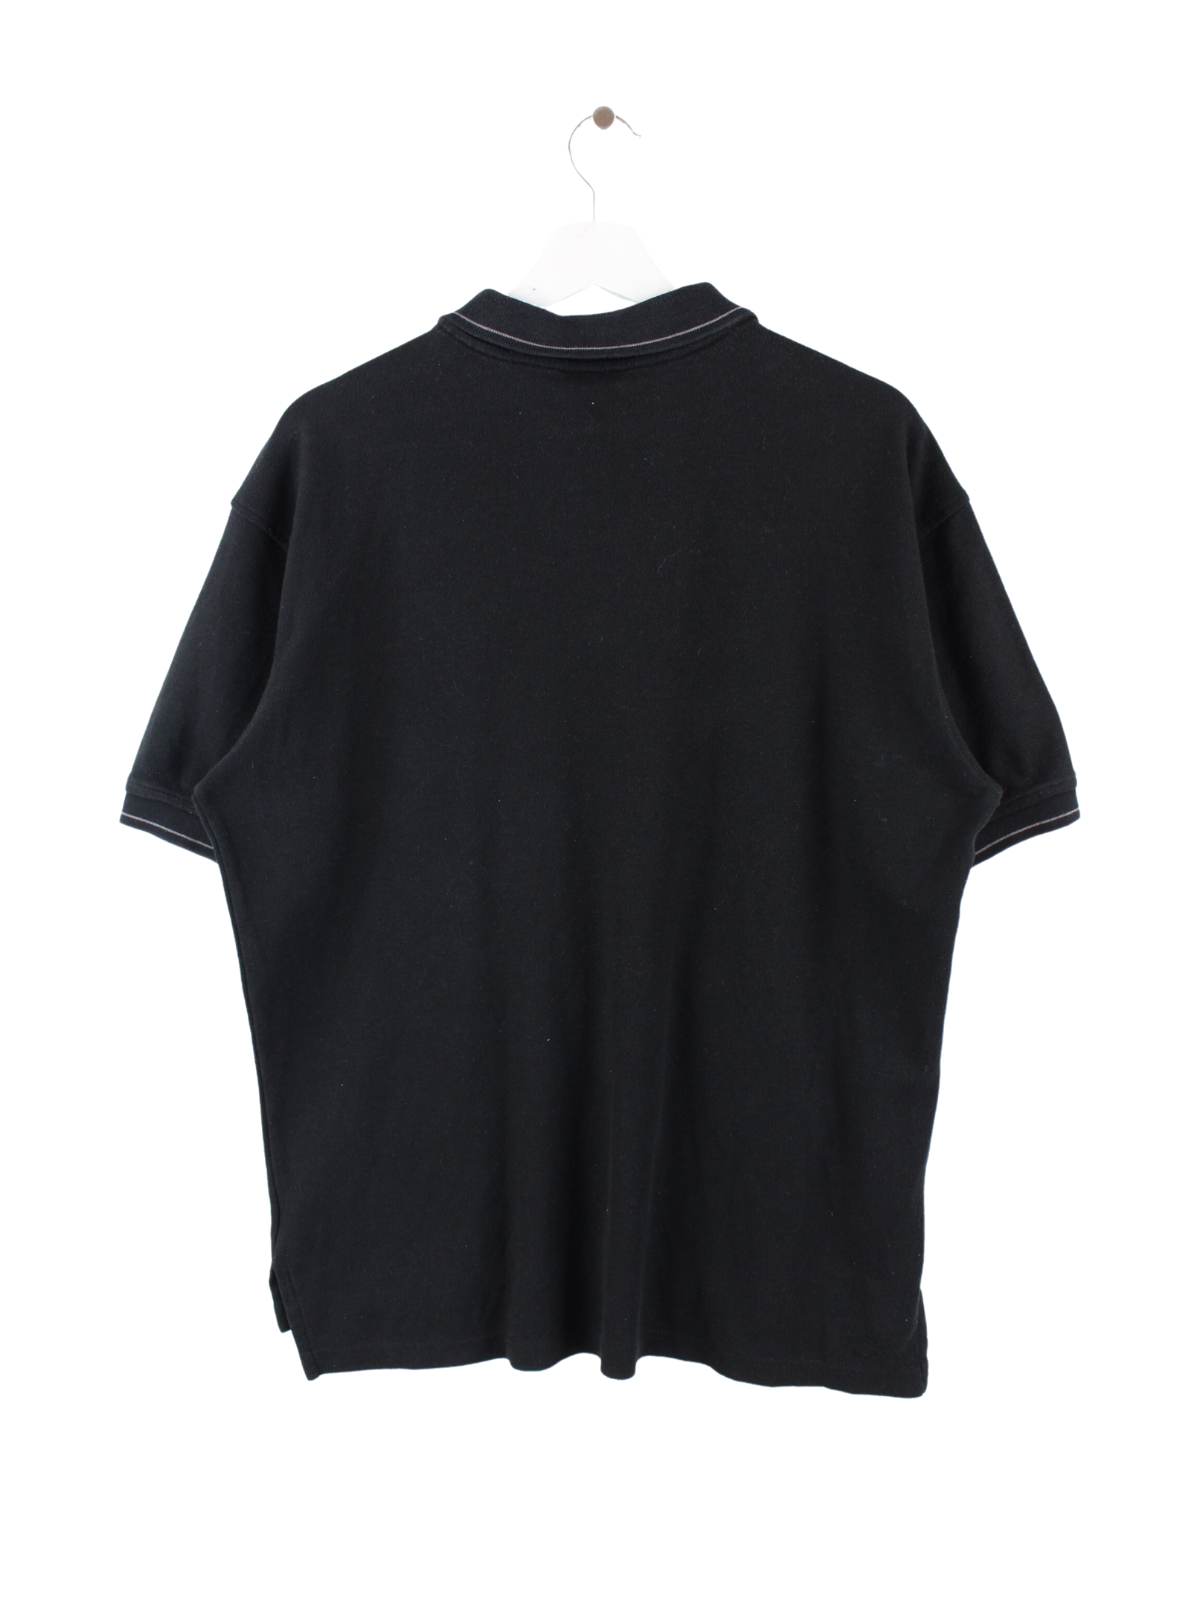 Umbro Polo Shirt Black L